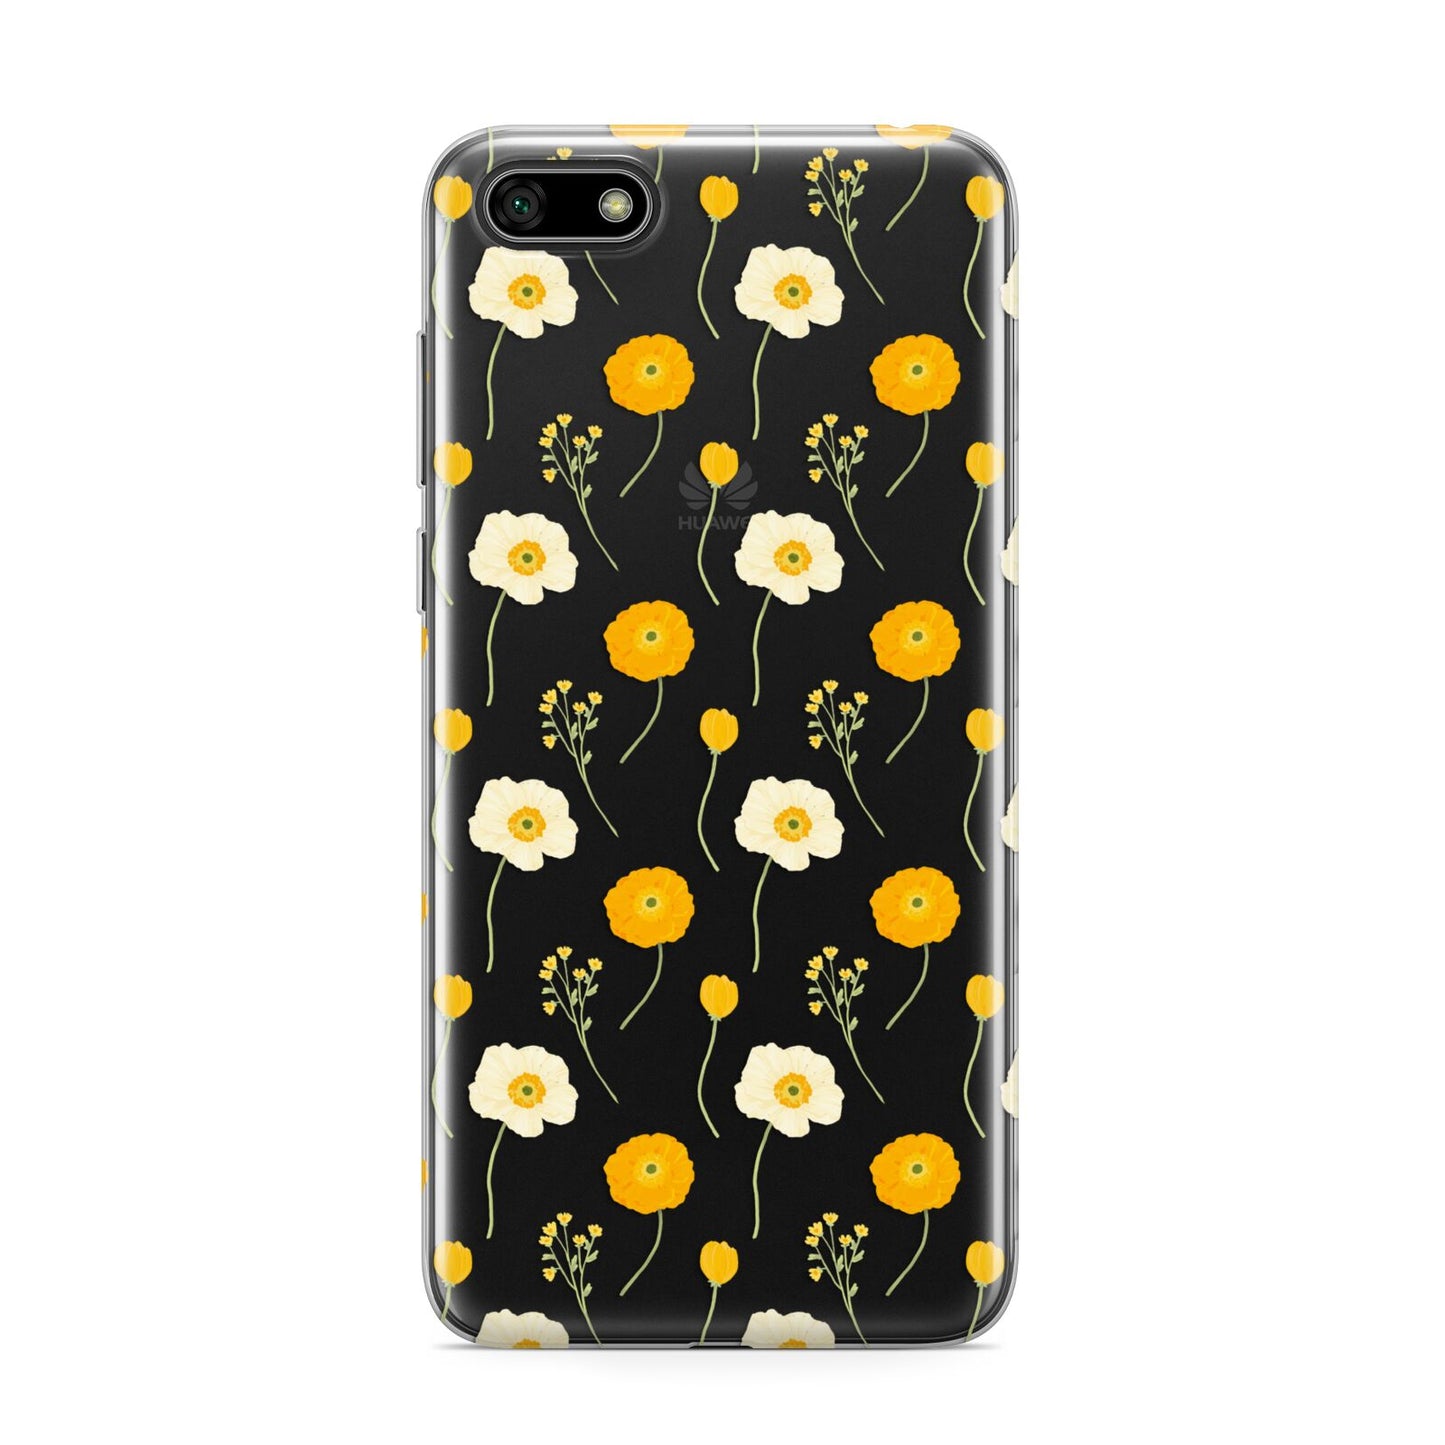 Wild Floral Huawei Y5 Prime 2018 Phone Case